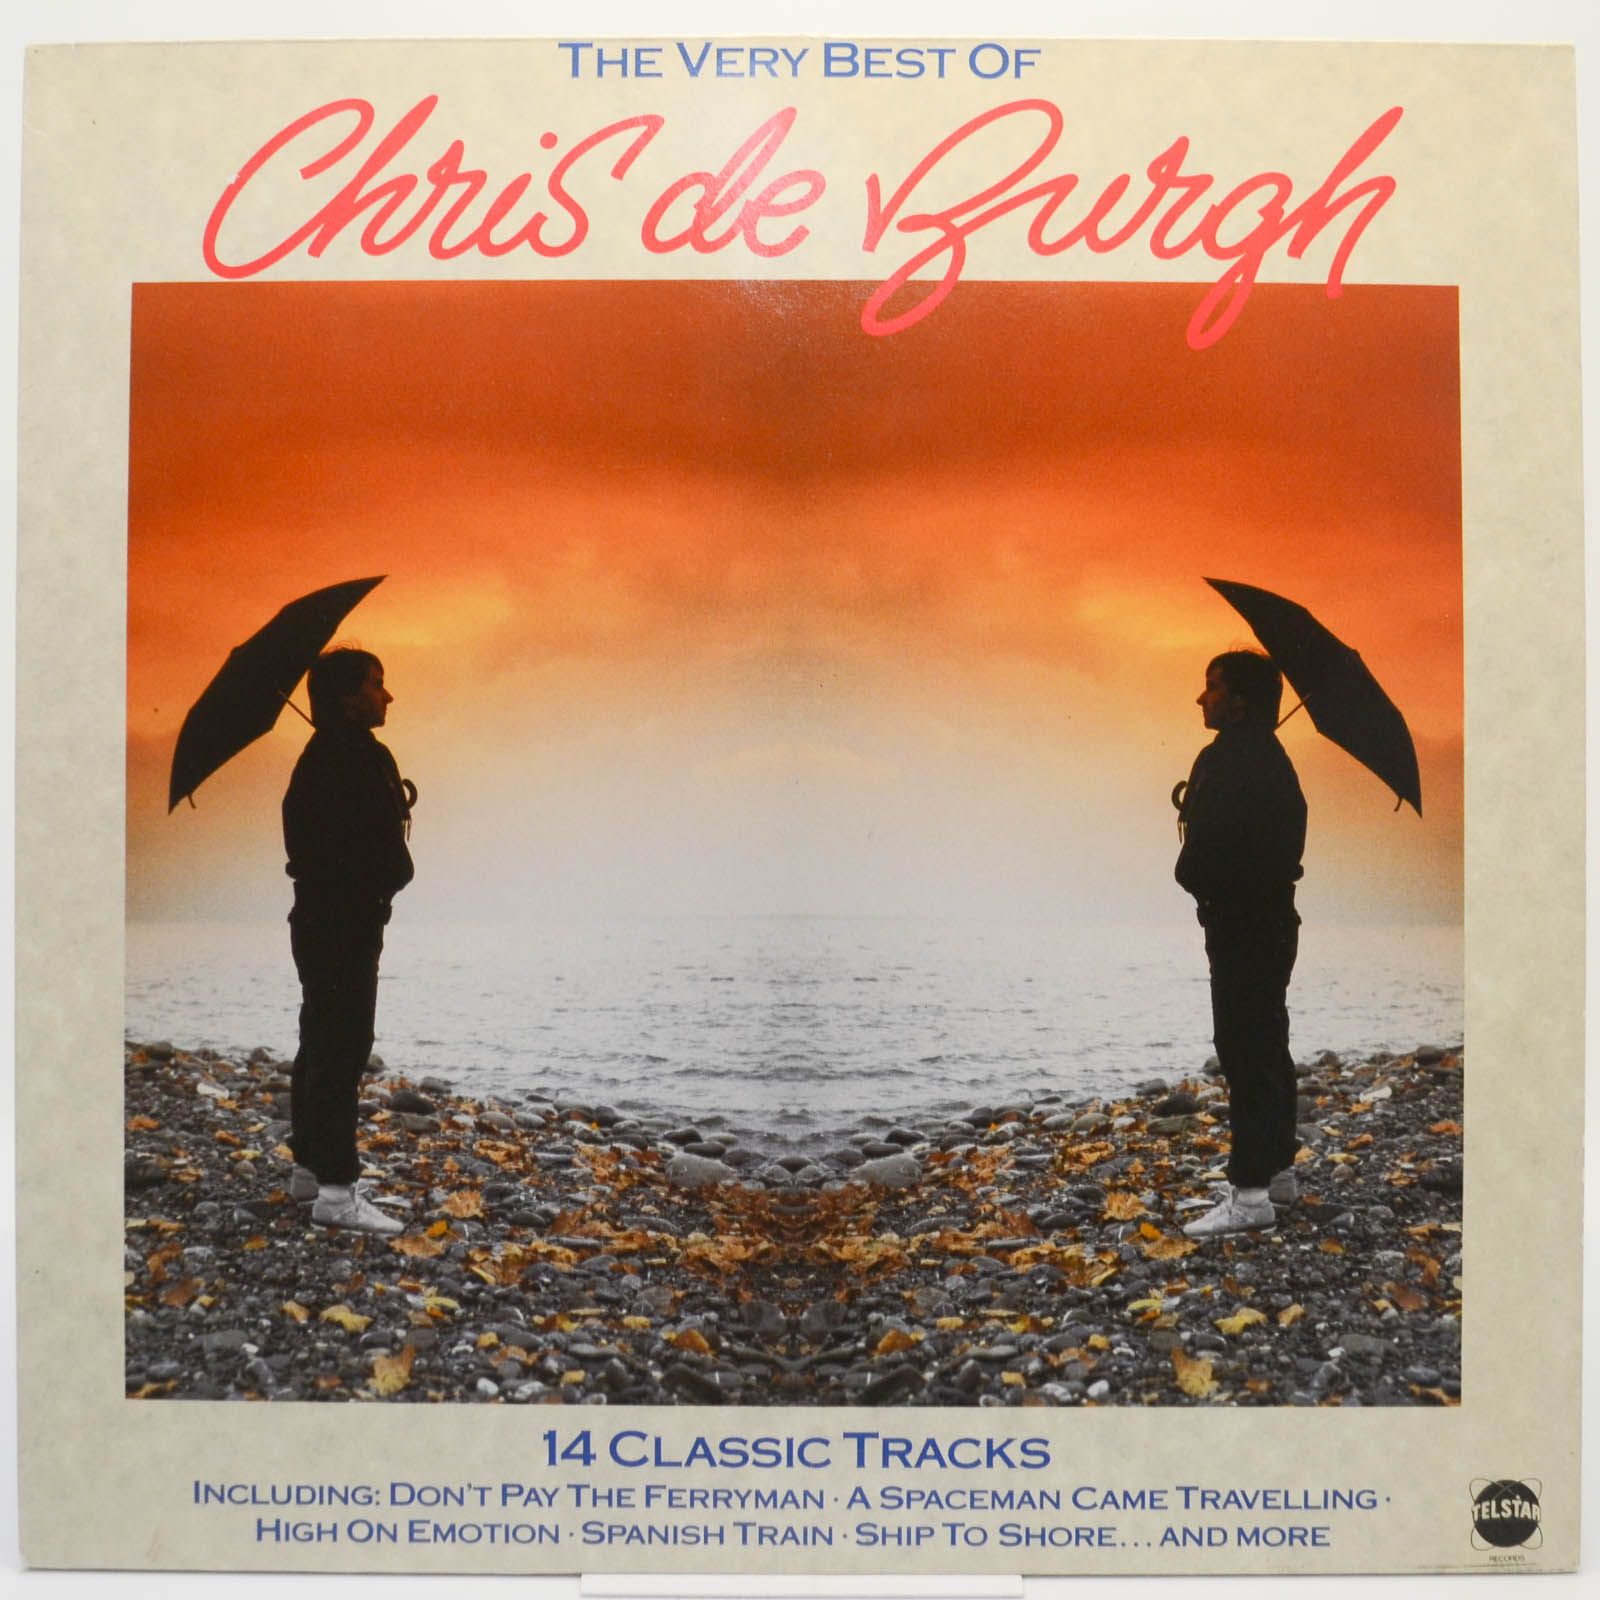 Chris de Burgh — The Very Best Of Chris de Burgh (UK), 1984